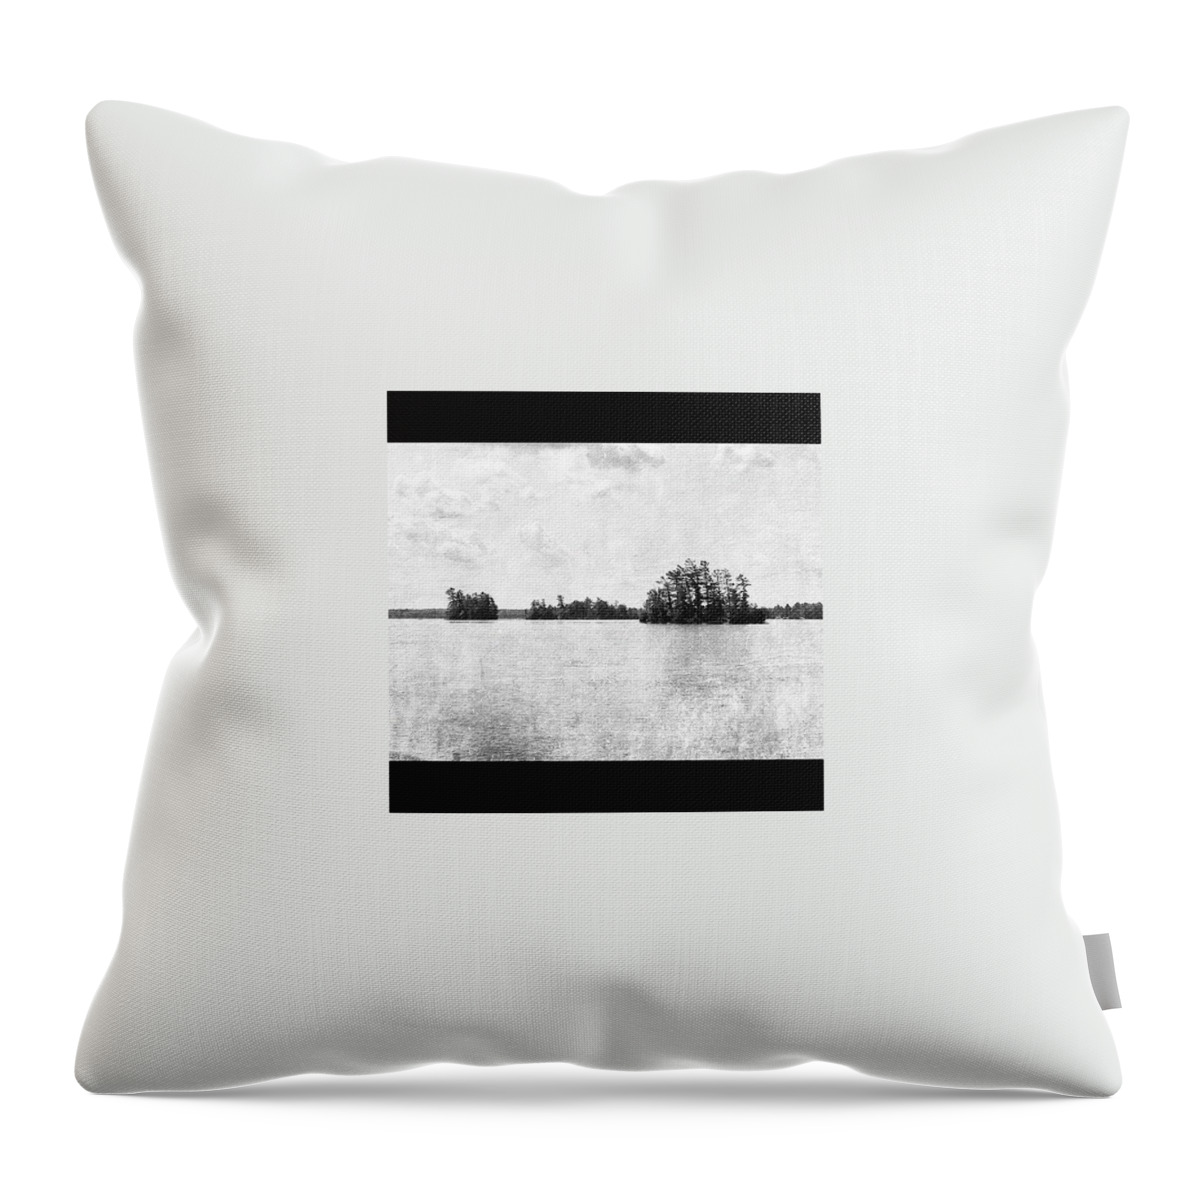 Muskoka Throw Pillow featuring the photograph Islands Of Muskoka by Ashley Irwin